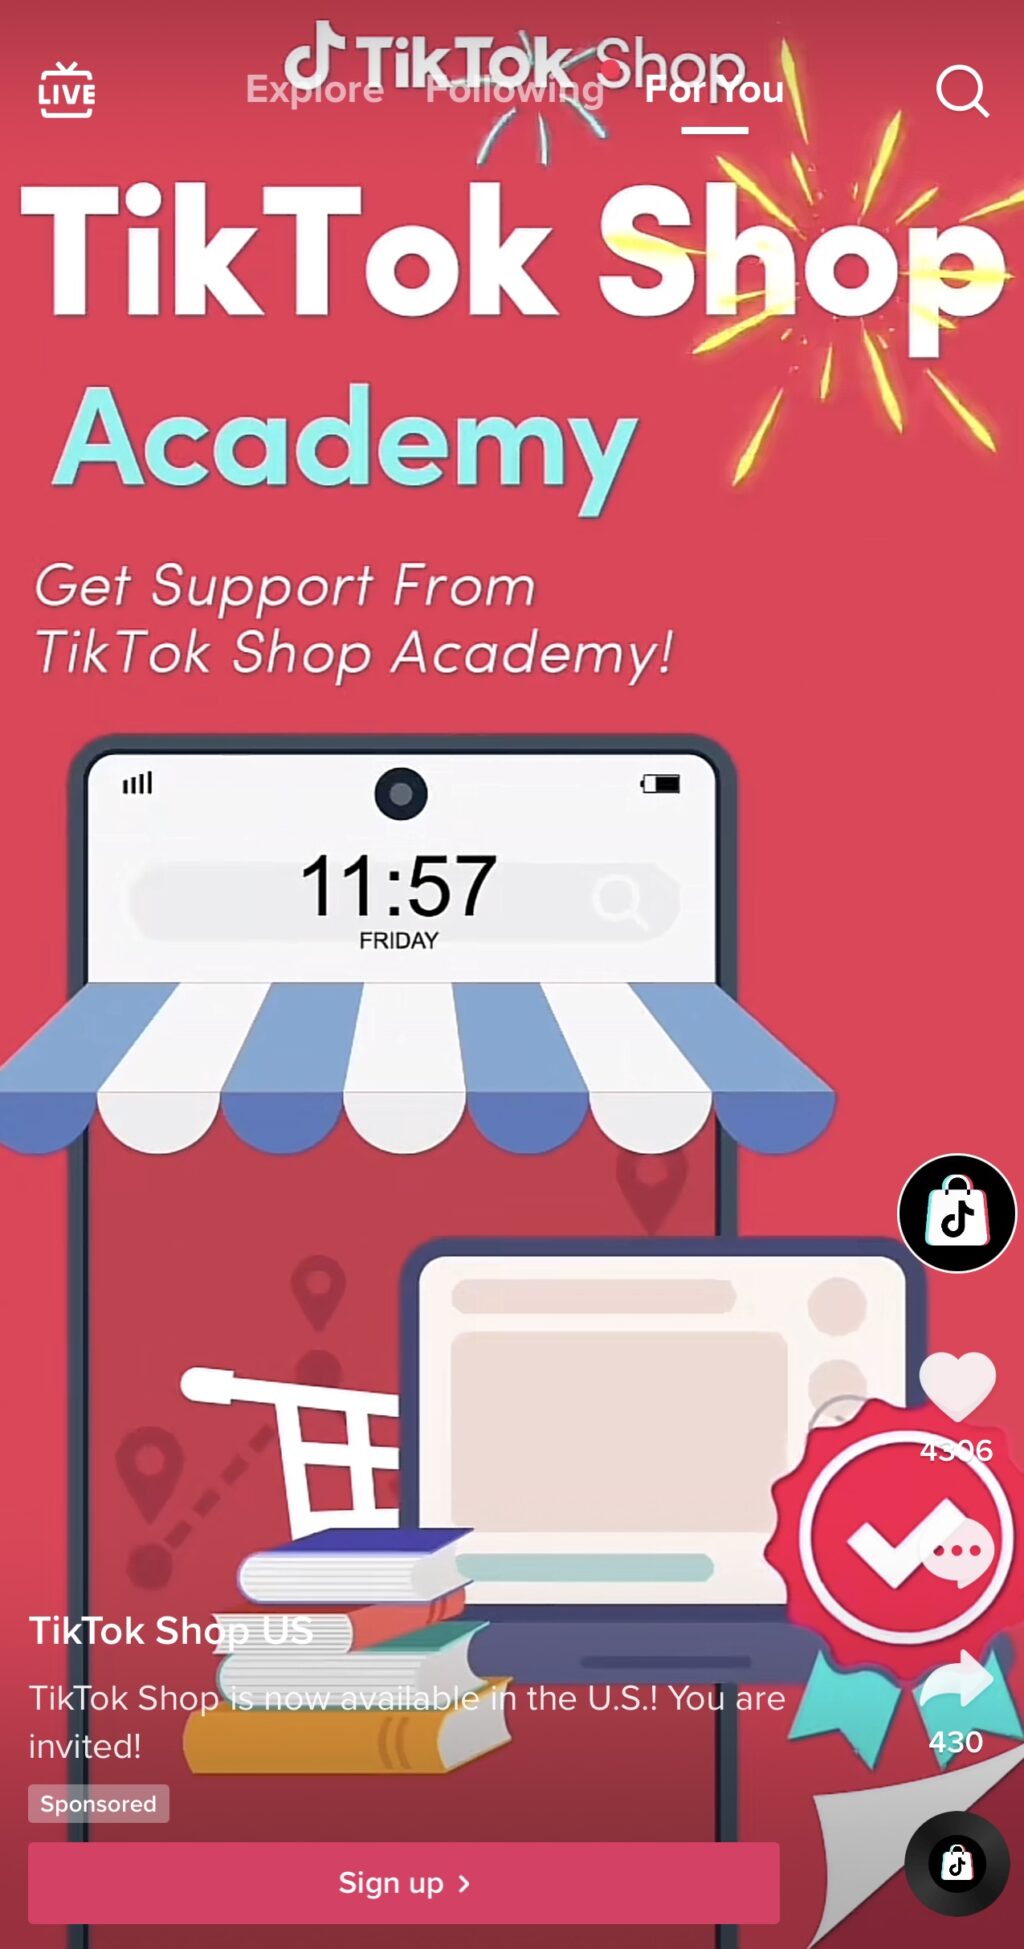 TikTok Shop Social Commerce For Brands And Influencers